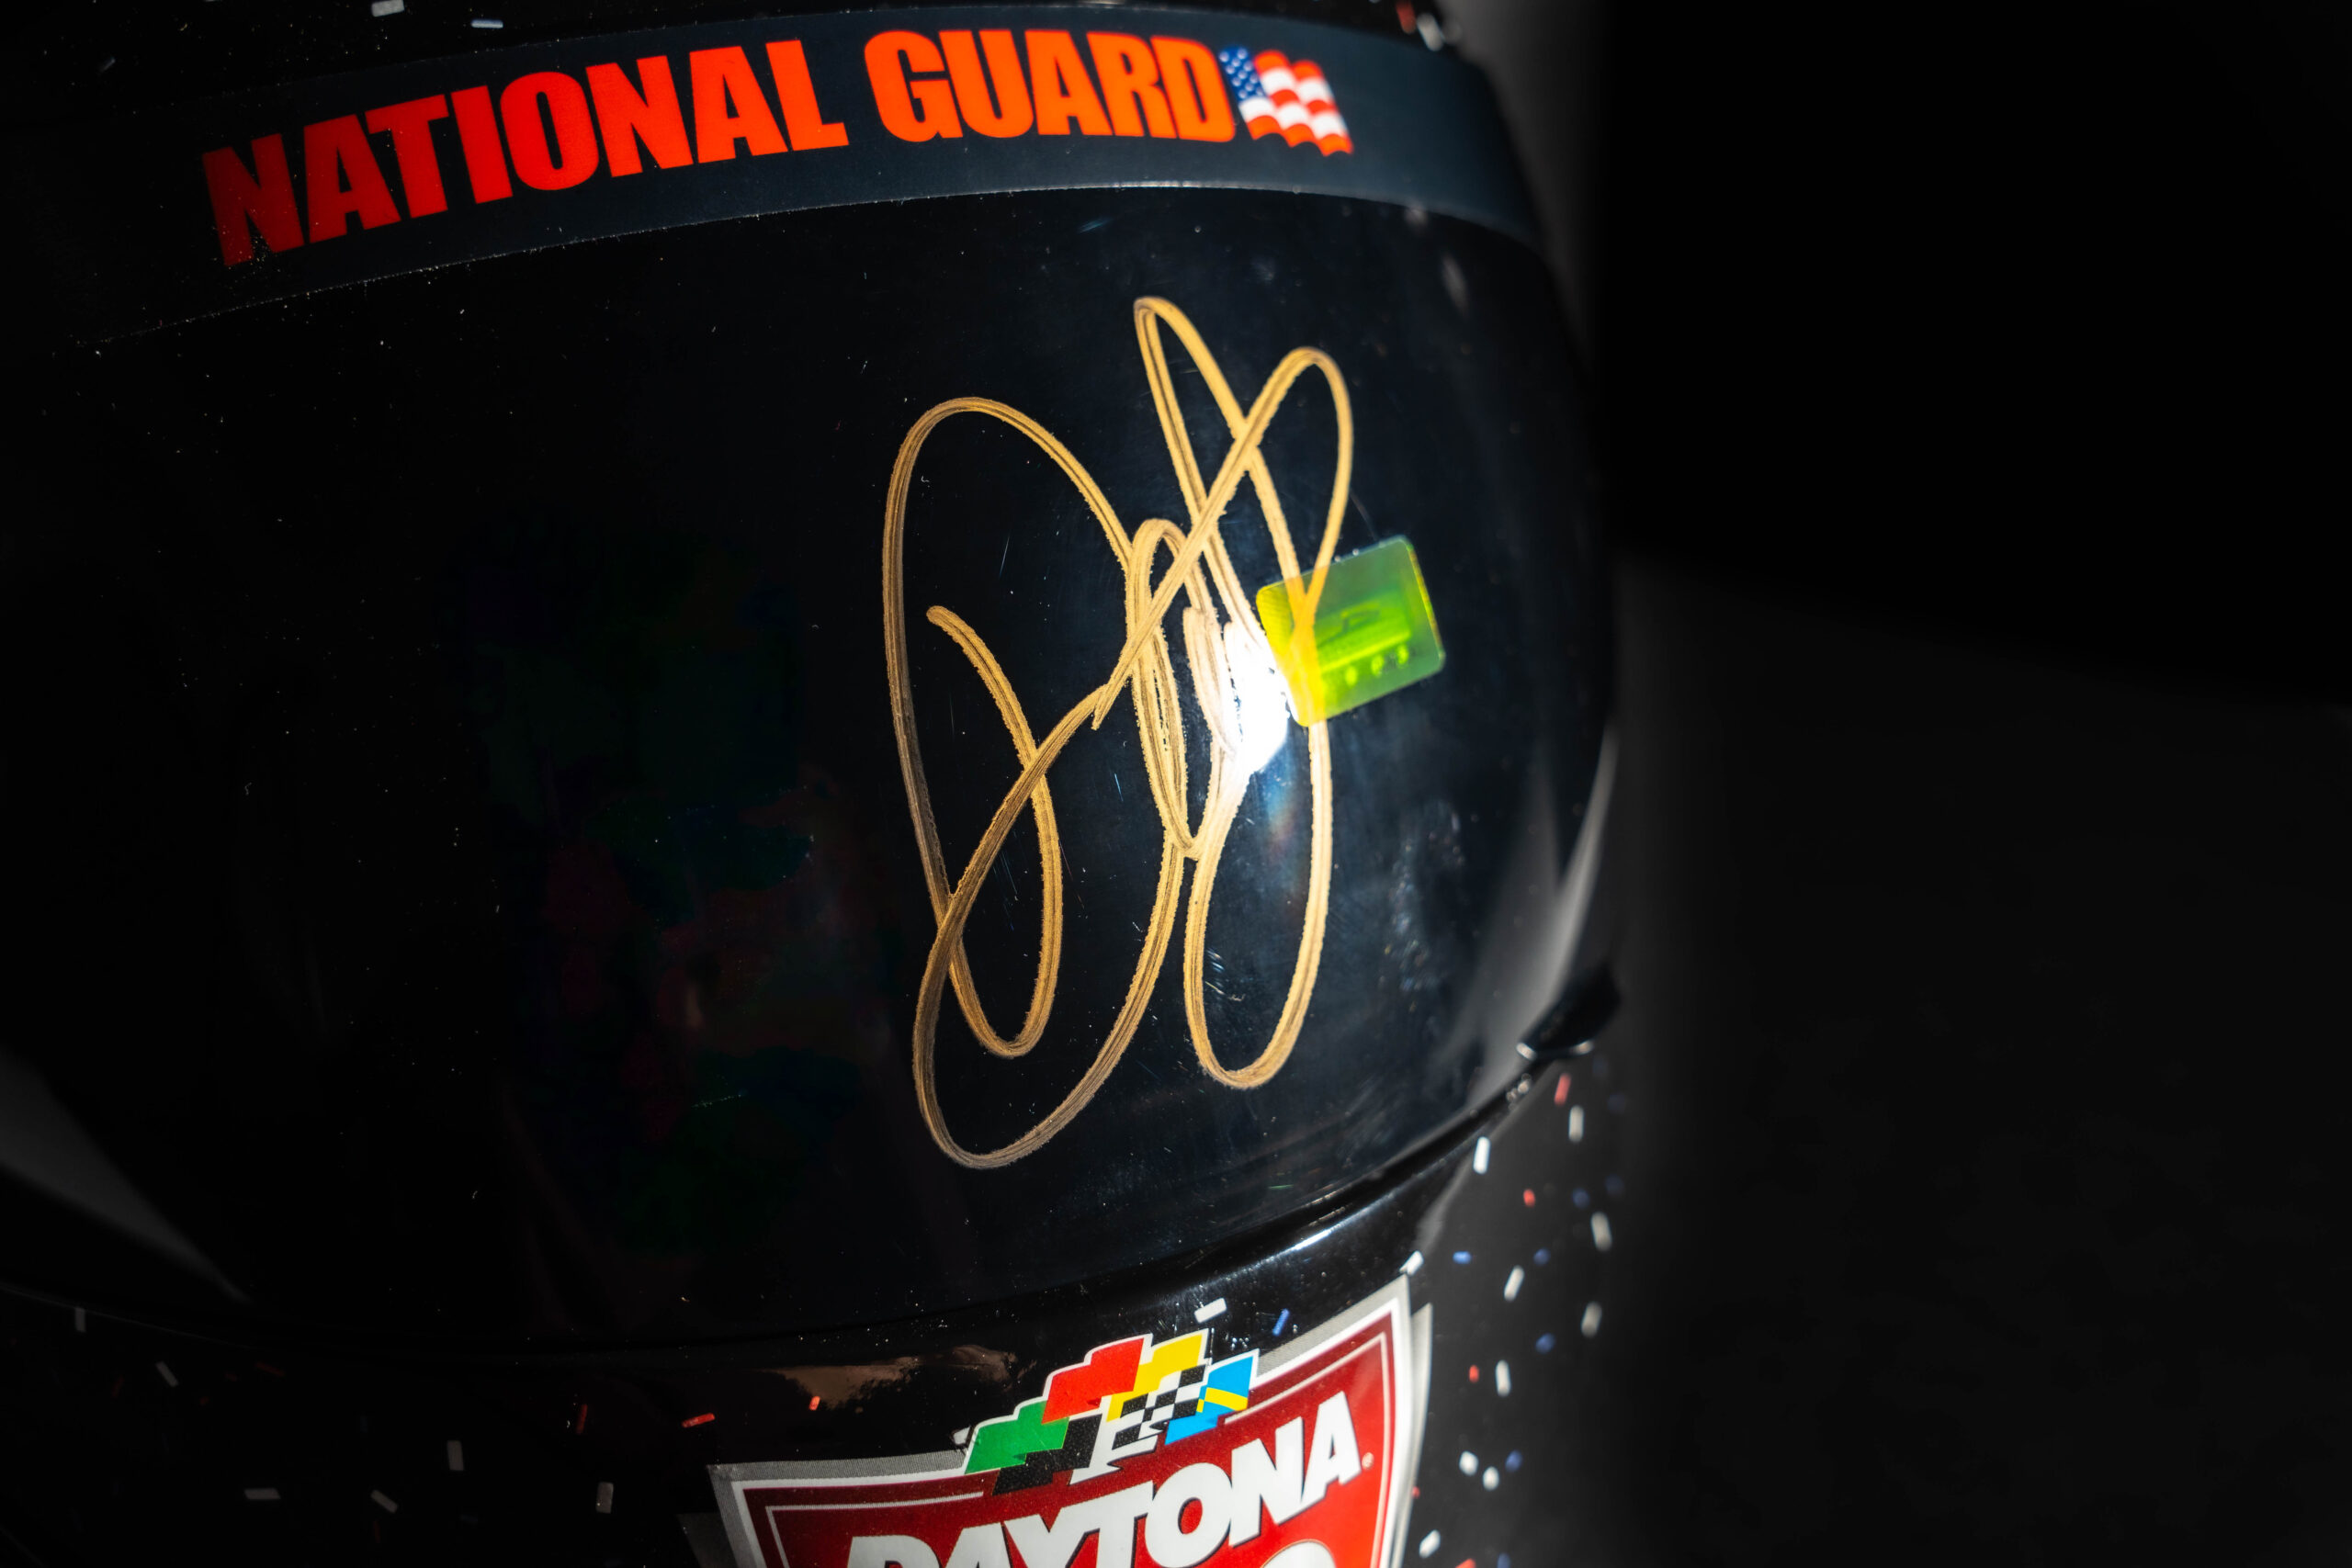 Dale Earnhardt Jr. Autographed Helmet